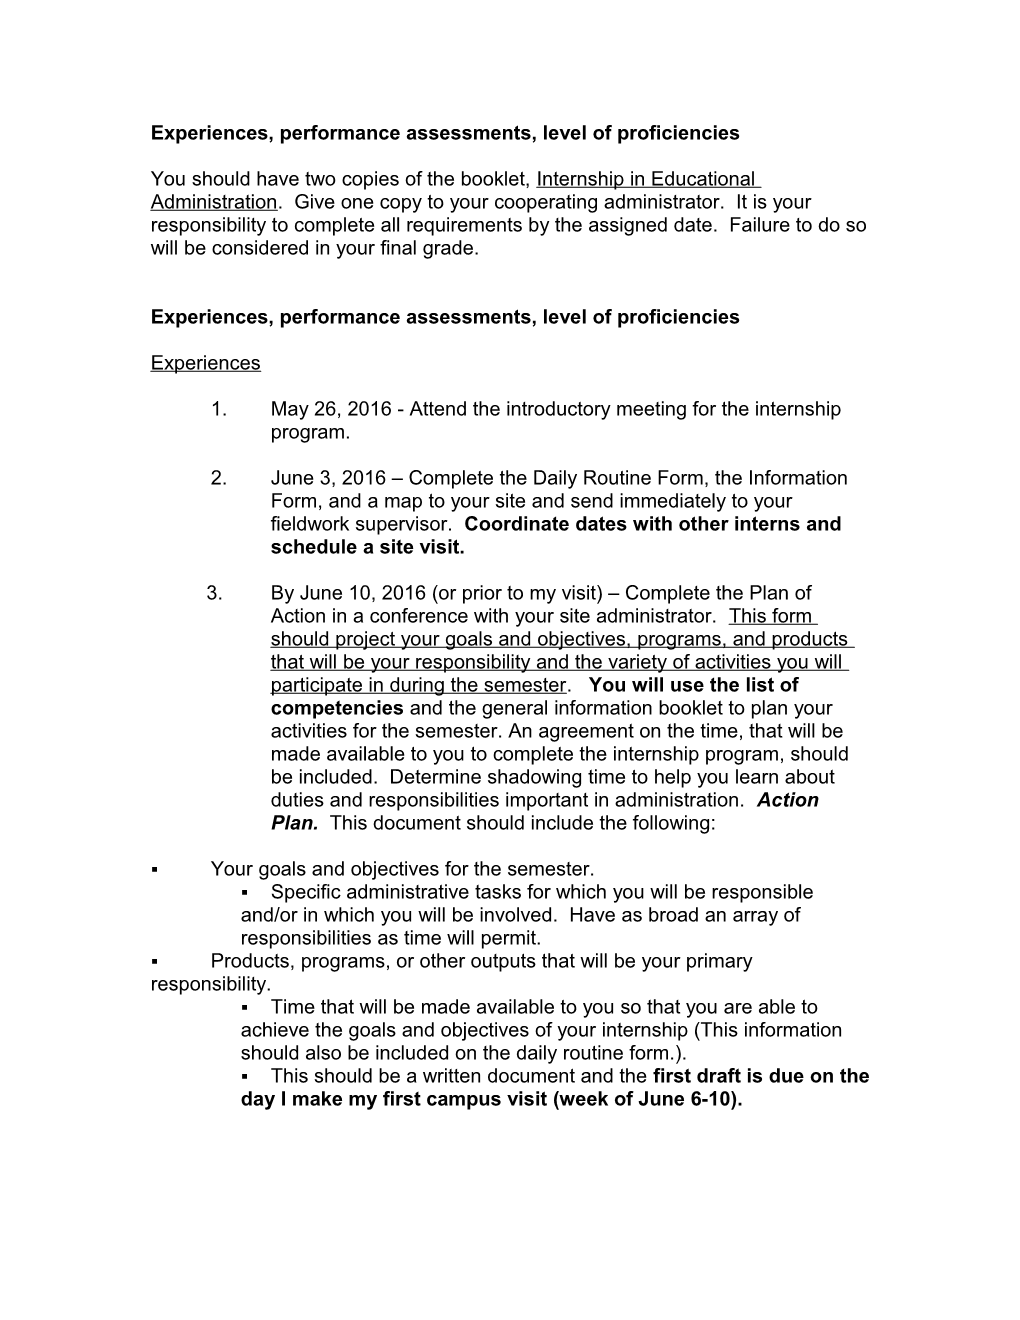 EDAD 6033 Educational Administration Internship - Superintendent